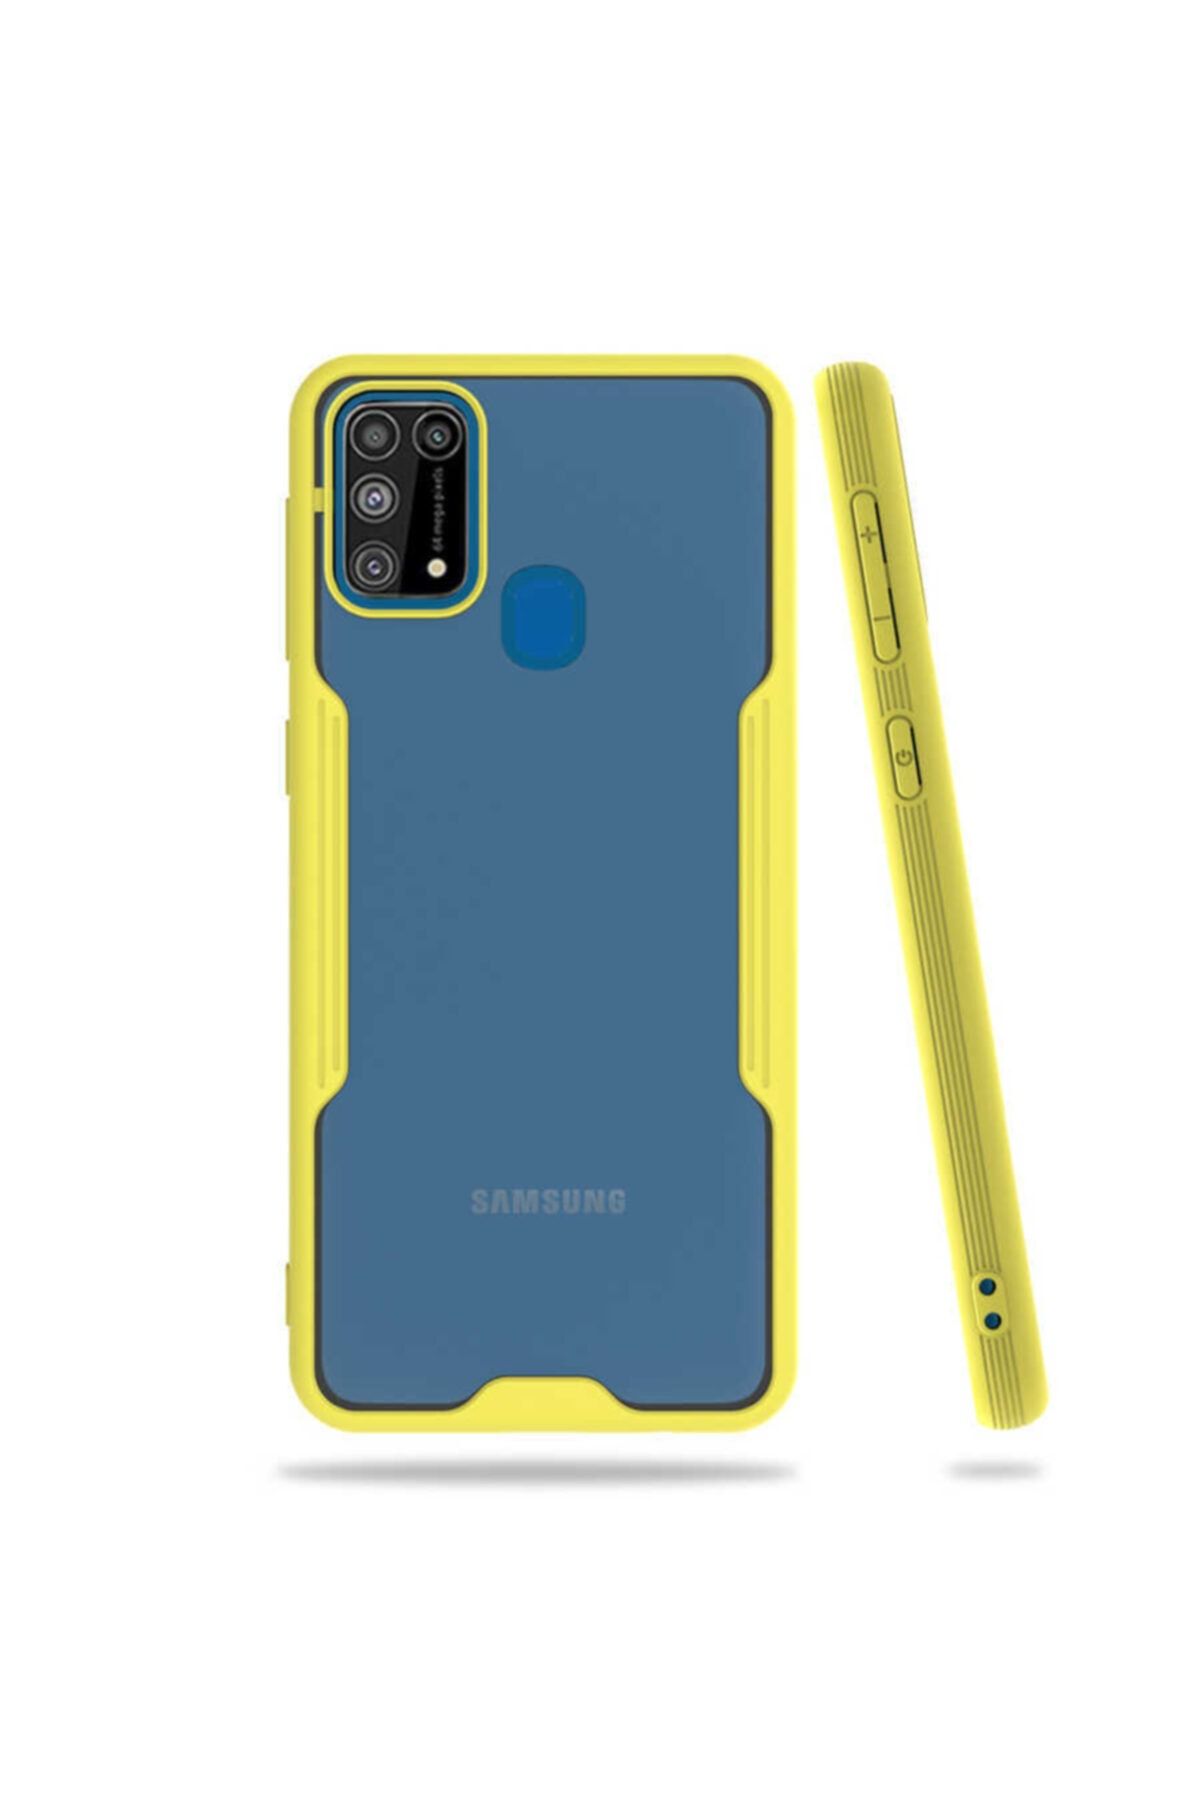 Canpay Samsung Galaxy M31 Uyumlu Kılıf Pastel Renk Tasarımı Cool-perfect Yumuşak Ve Esnek